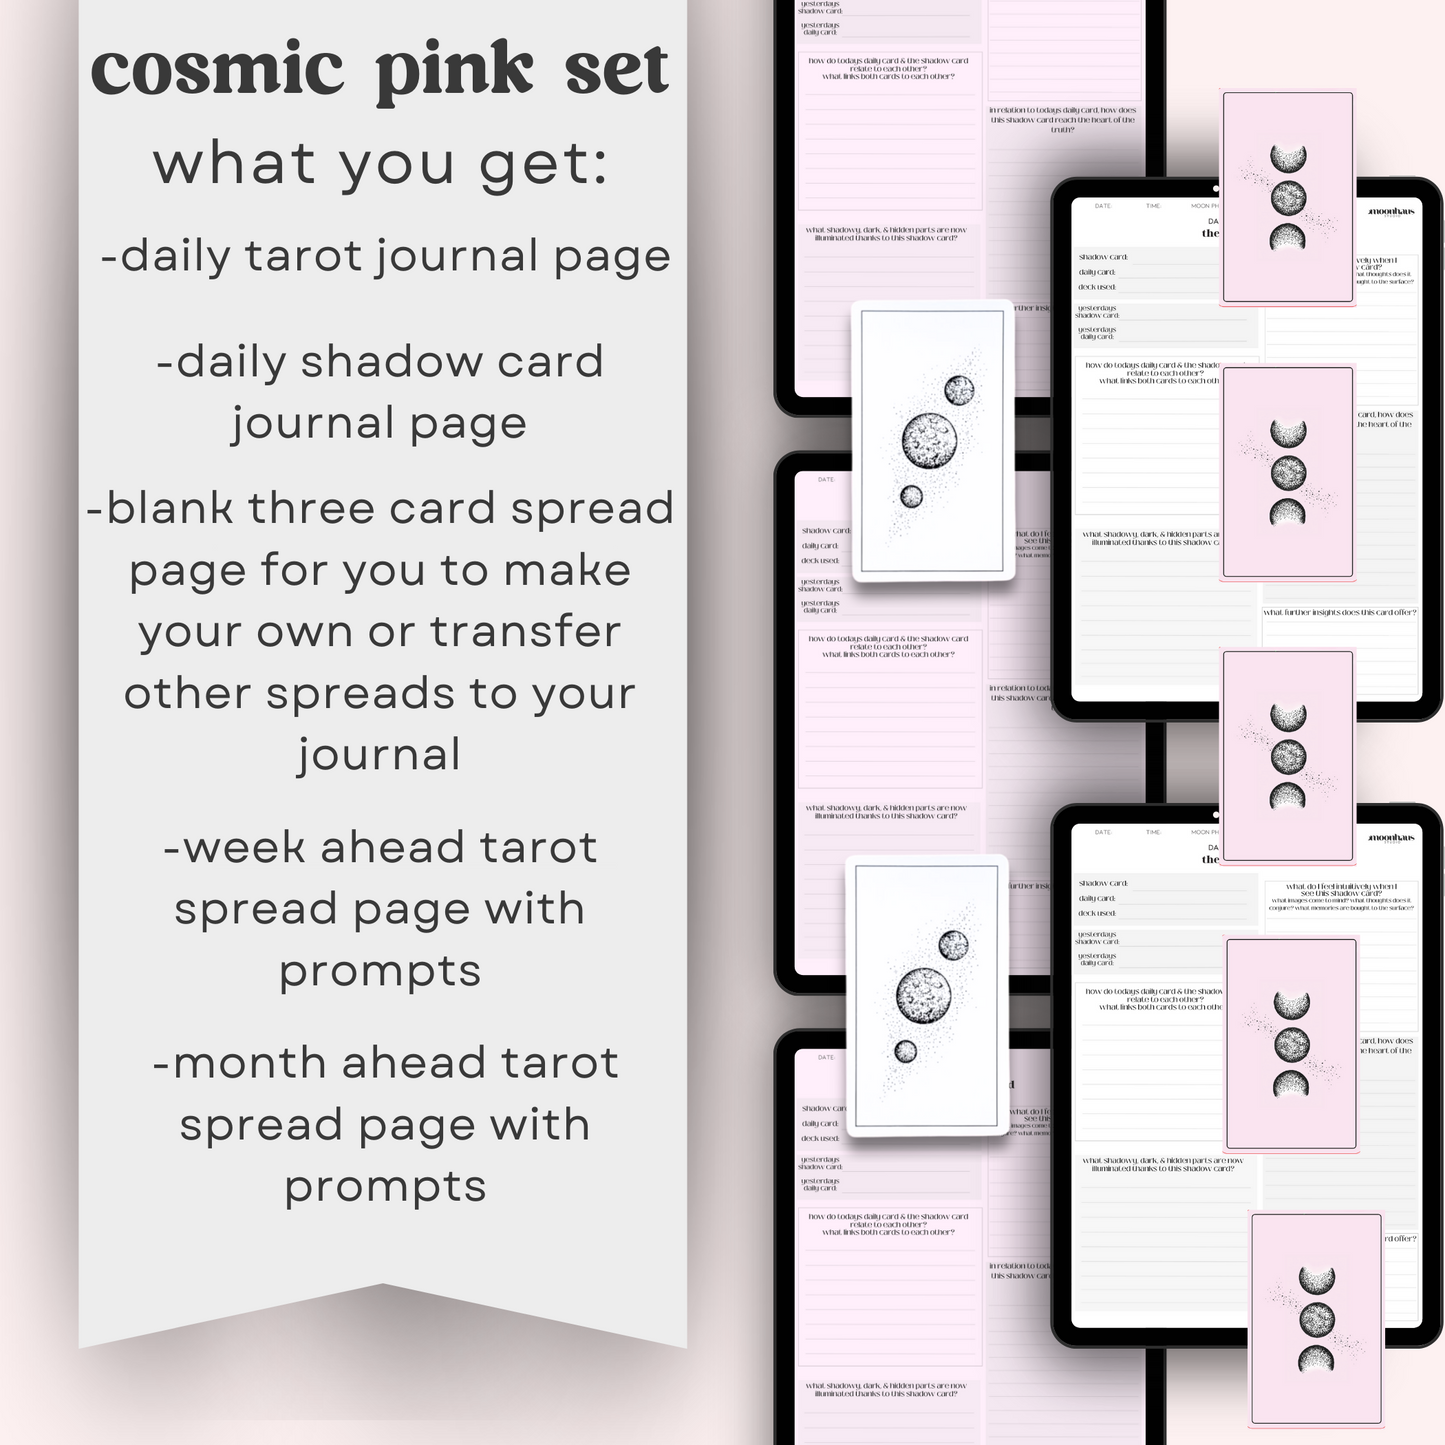 free download: tarot spread and journal set in Cosmic Pink PDF freebie